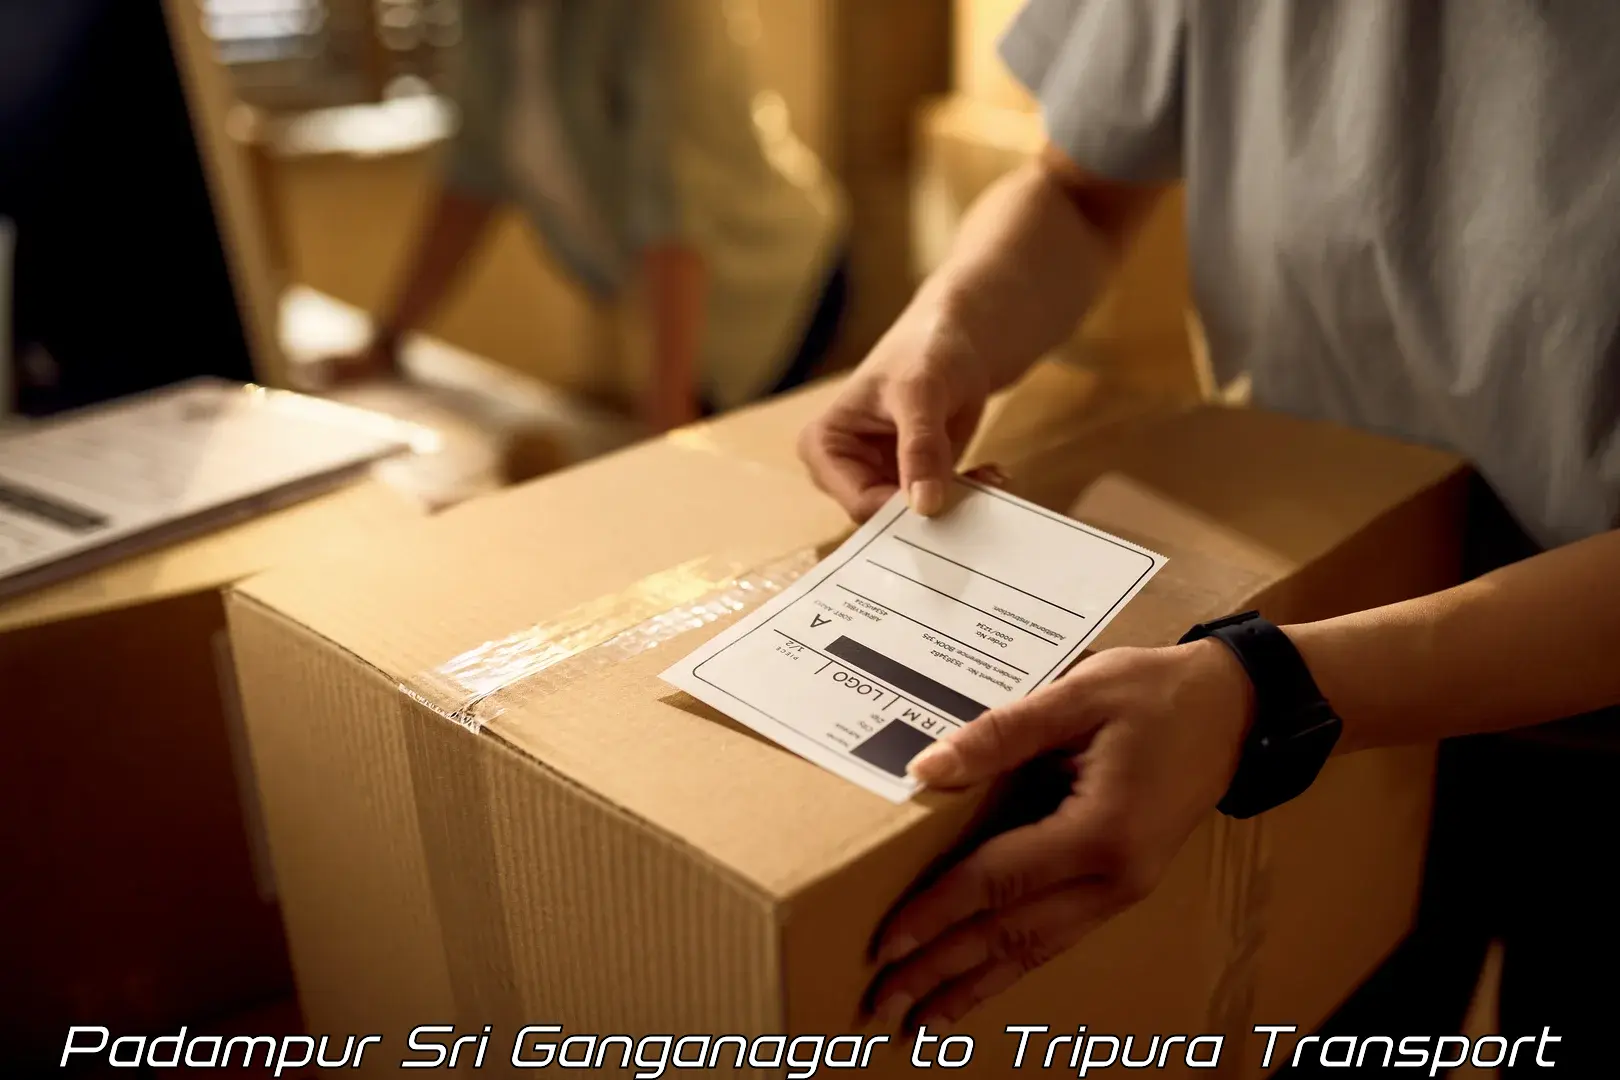 Goods delivery service Padampur Sri Ganganagar to Kumarghat